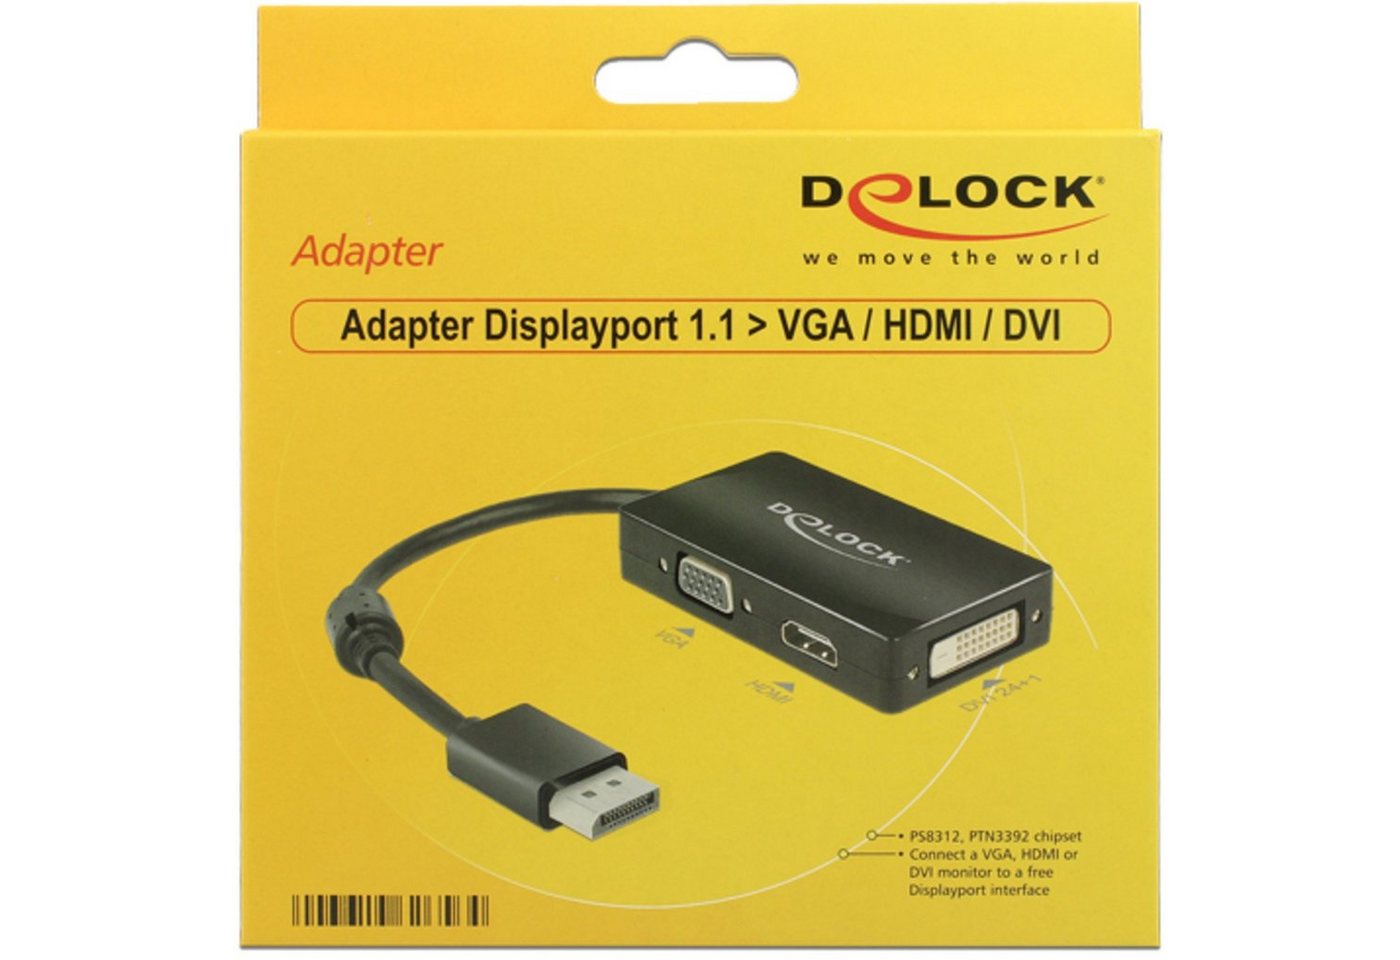 Delock Adapter Displayport > VGA/HDMI/DVI-D Audio- & Video-Adapter von Delock